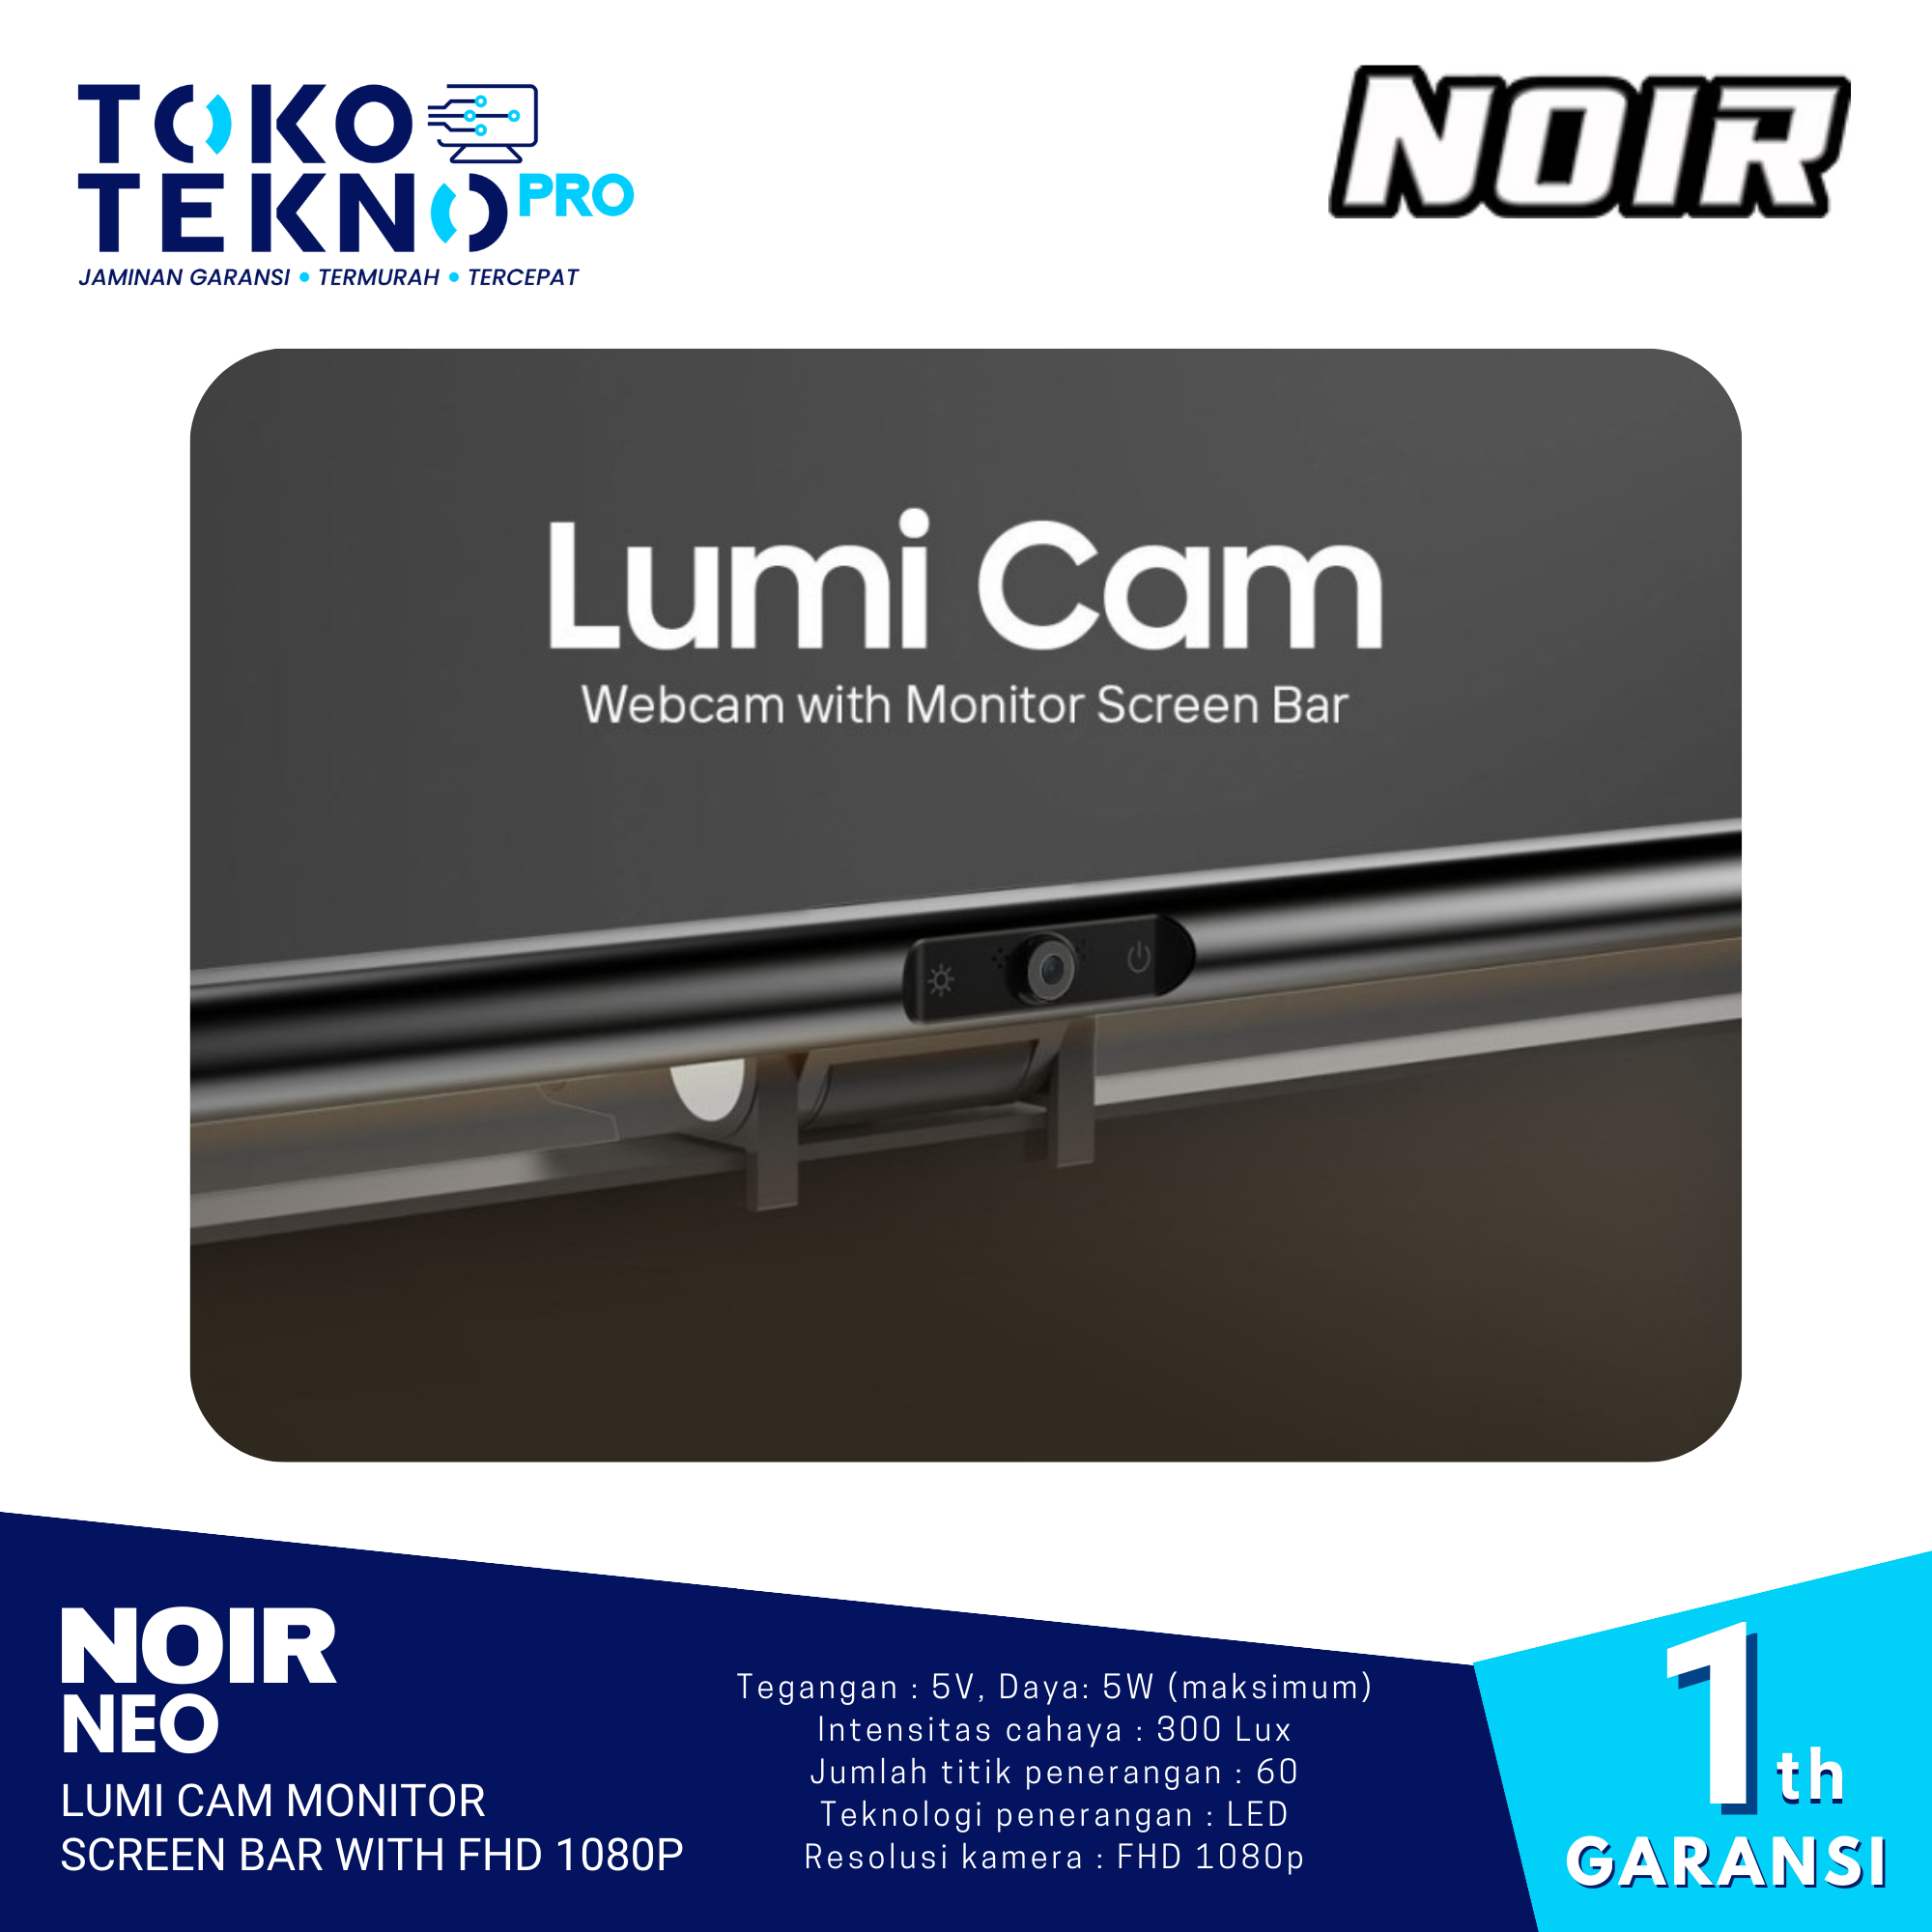 Noir Neo Lumi Cam Monitor Screen Bar with FHD 1080p Webcam